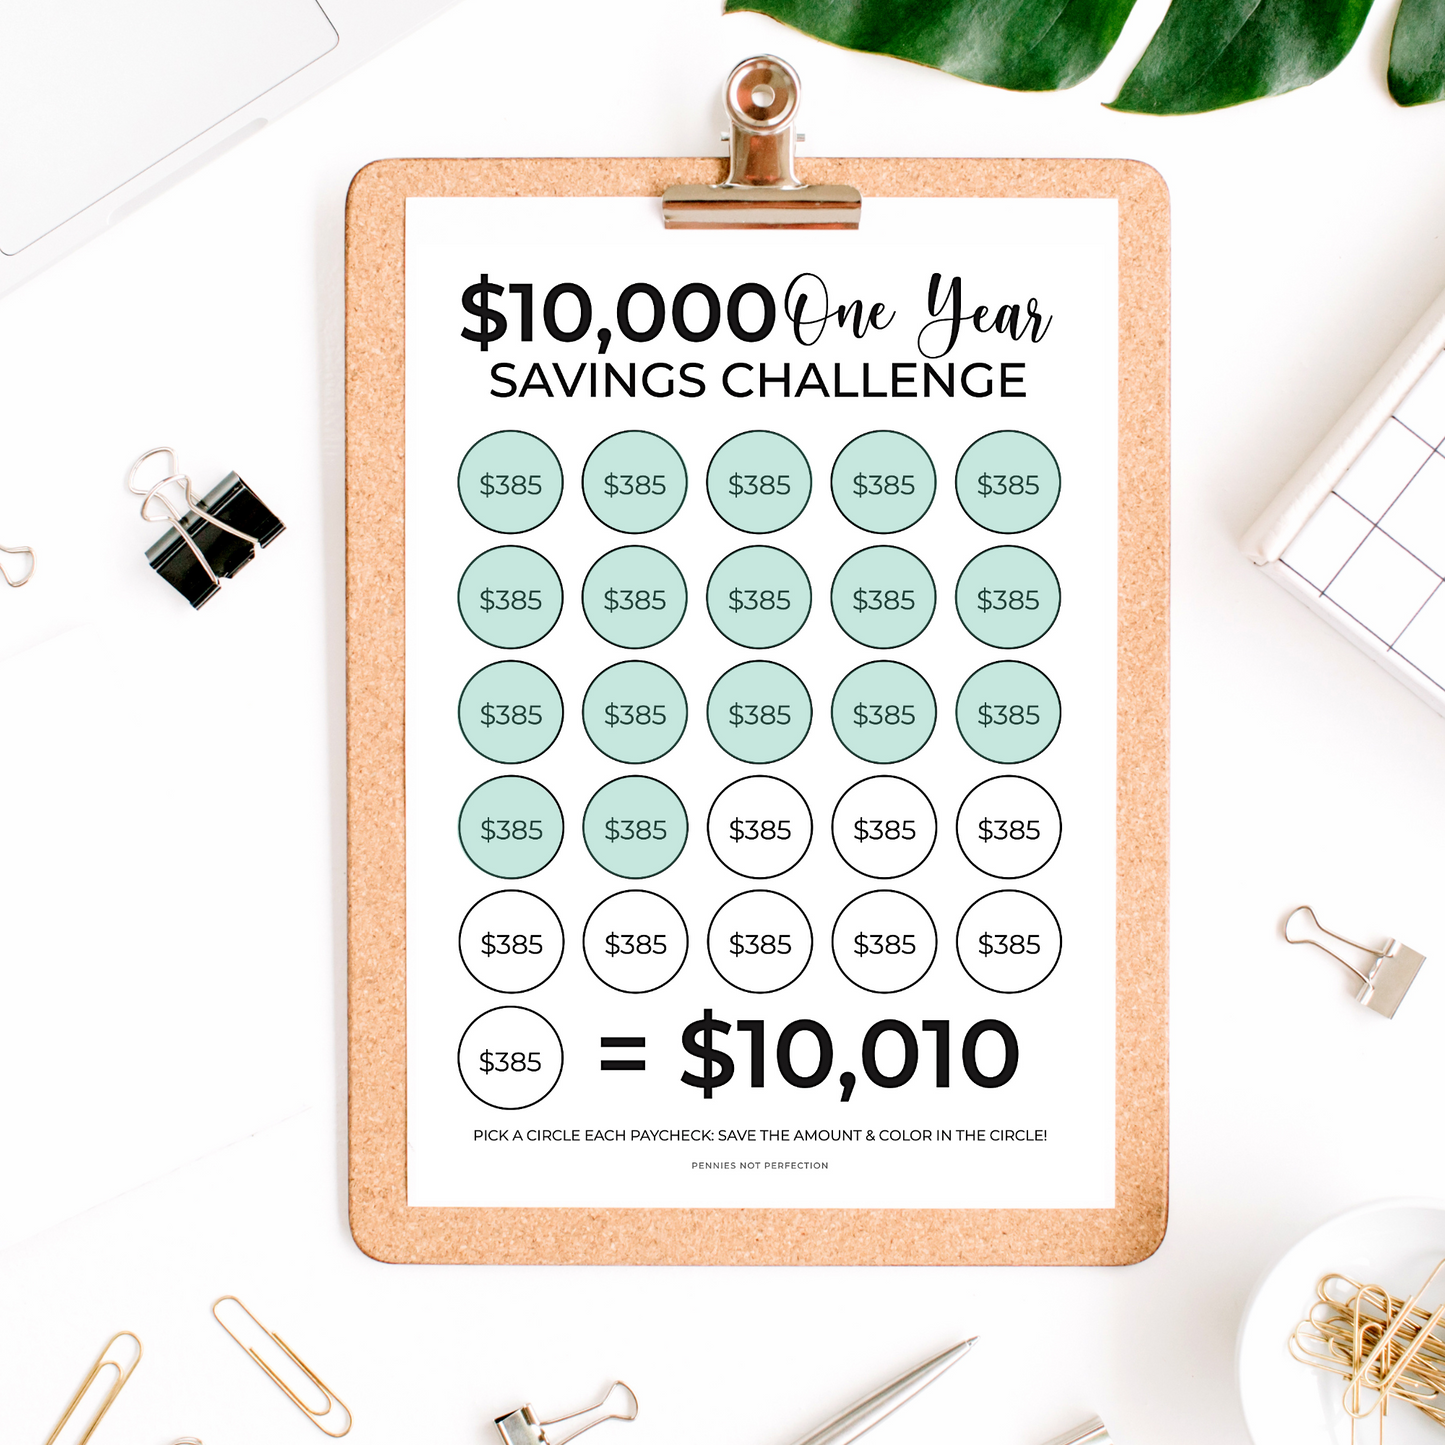 $10,000 Biweekly Savings Challenge Printable (Save $10,000 In One Year)